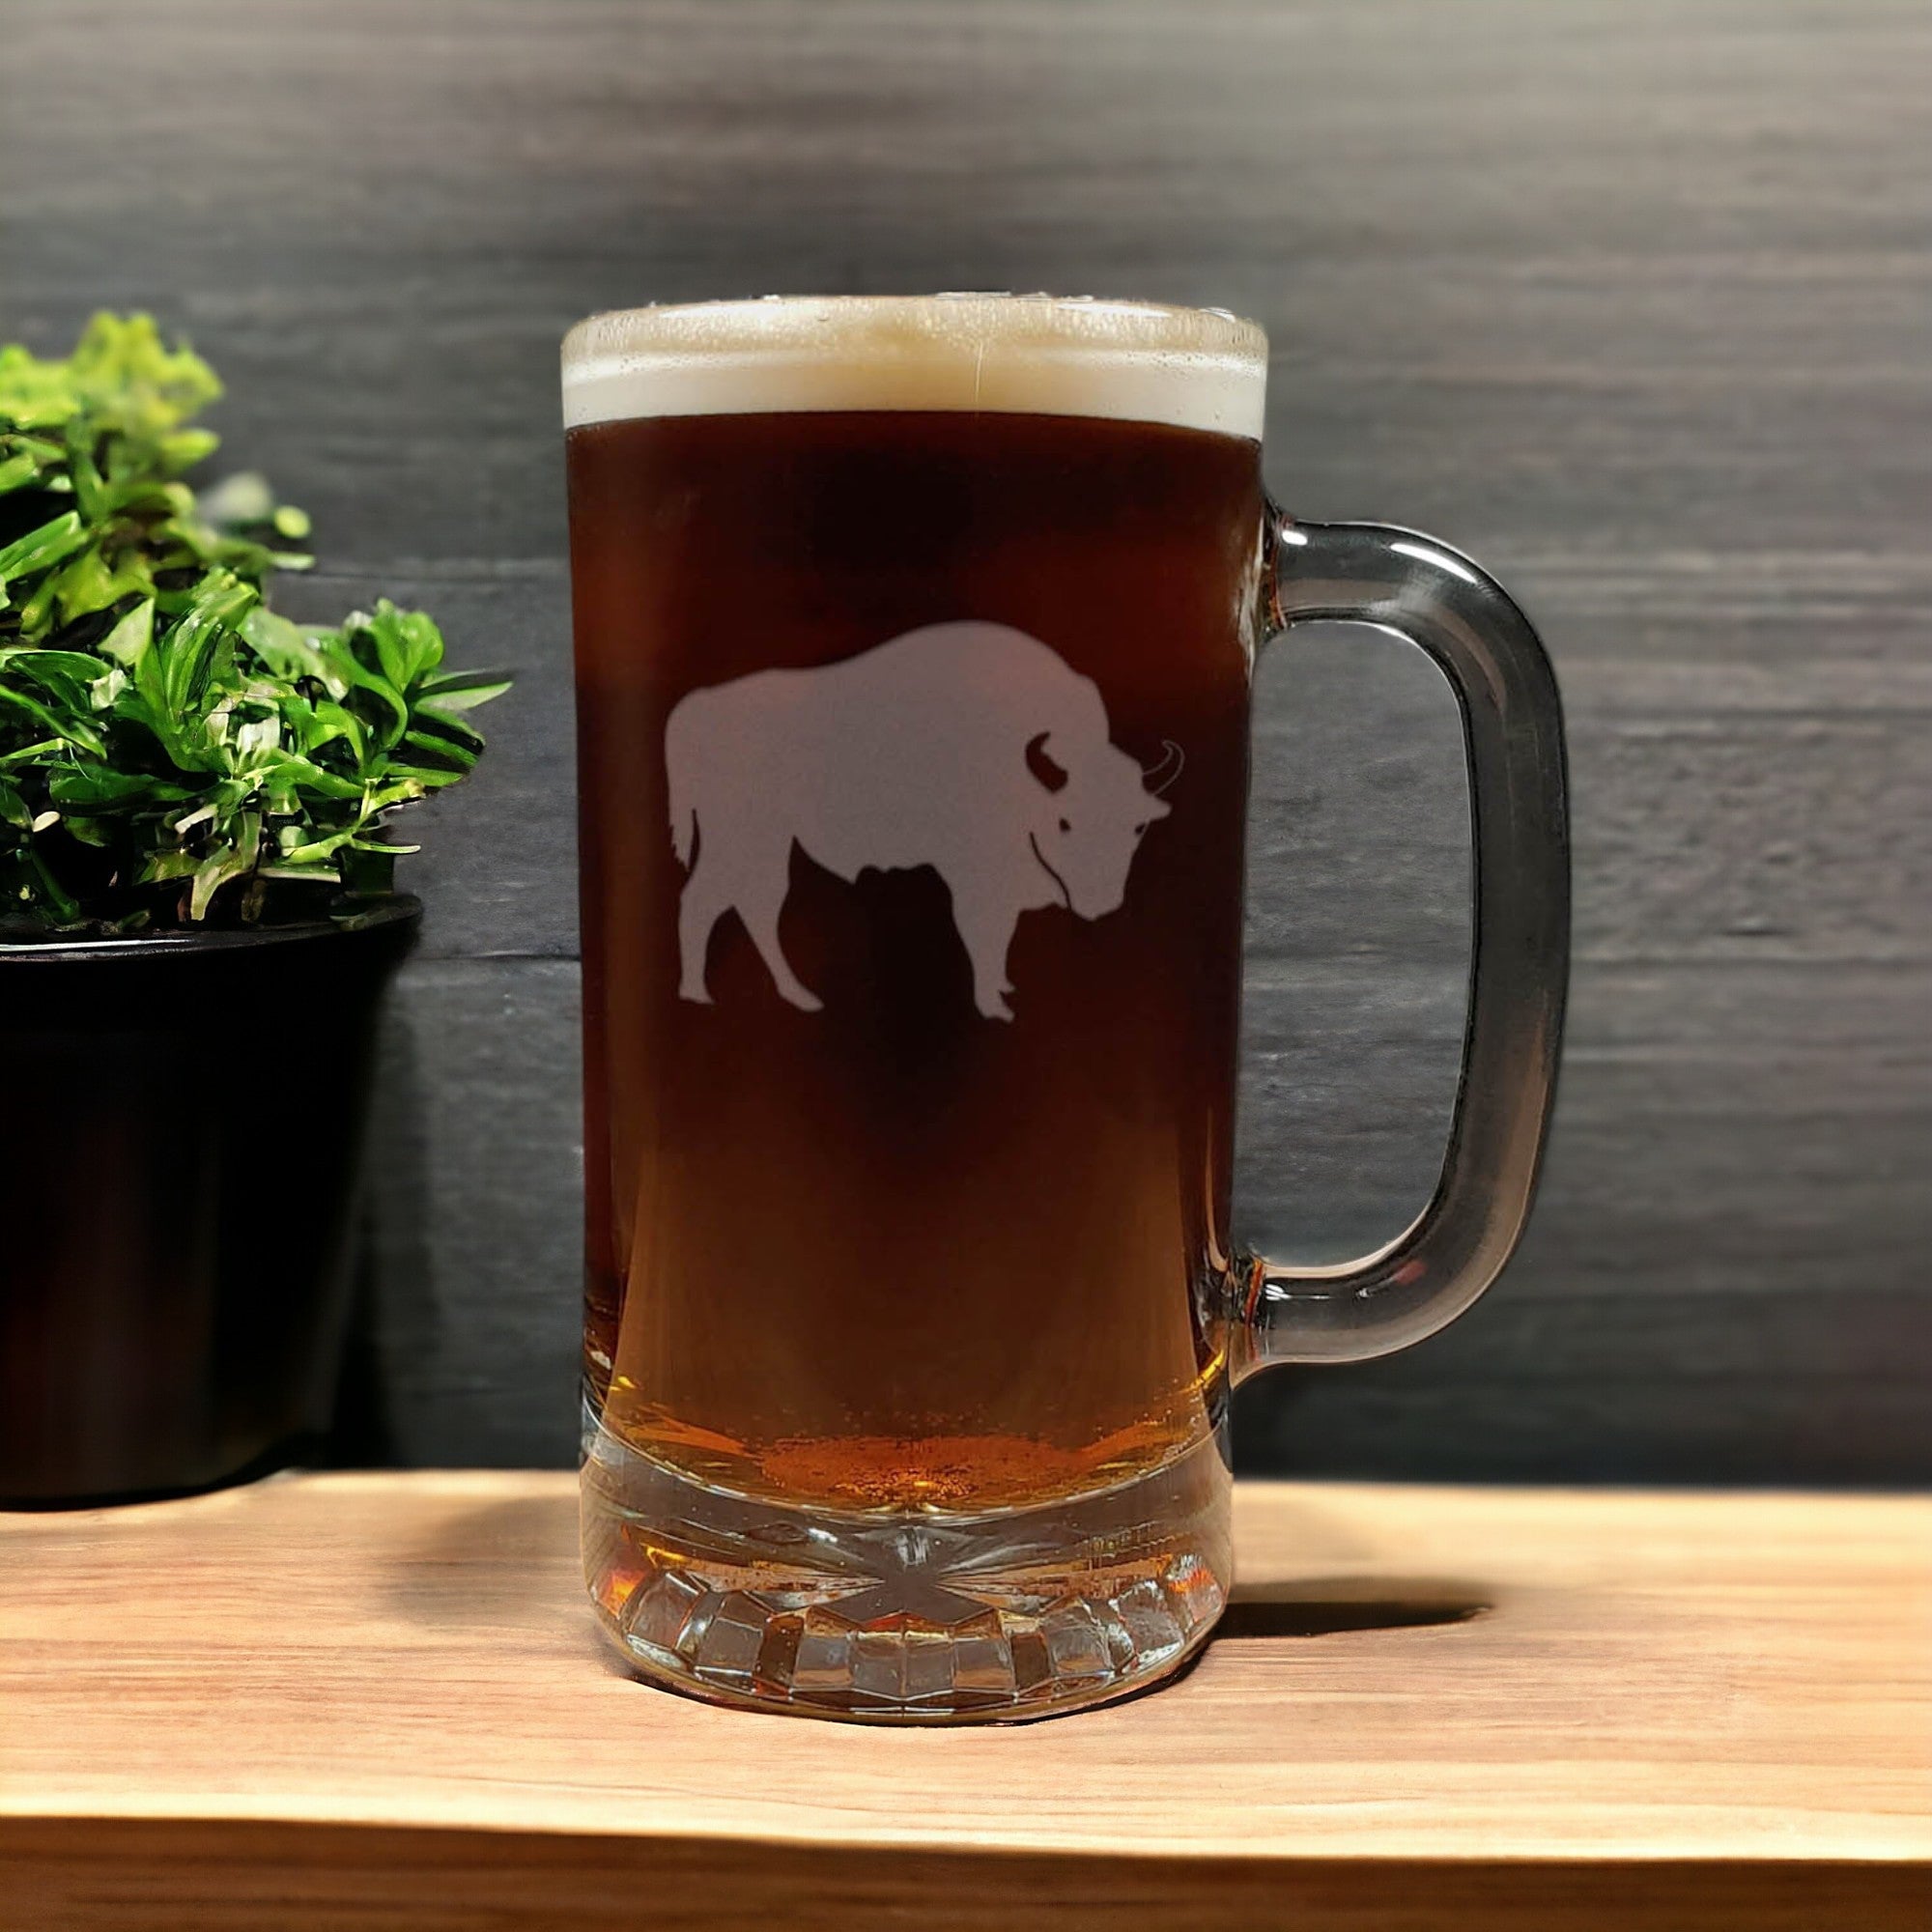 Buffalo 16oz Engraved Beer Mug - Bison Beer Glass - Animal Etched Personalized Gift